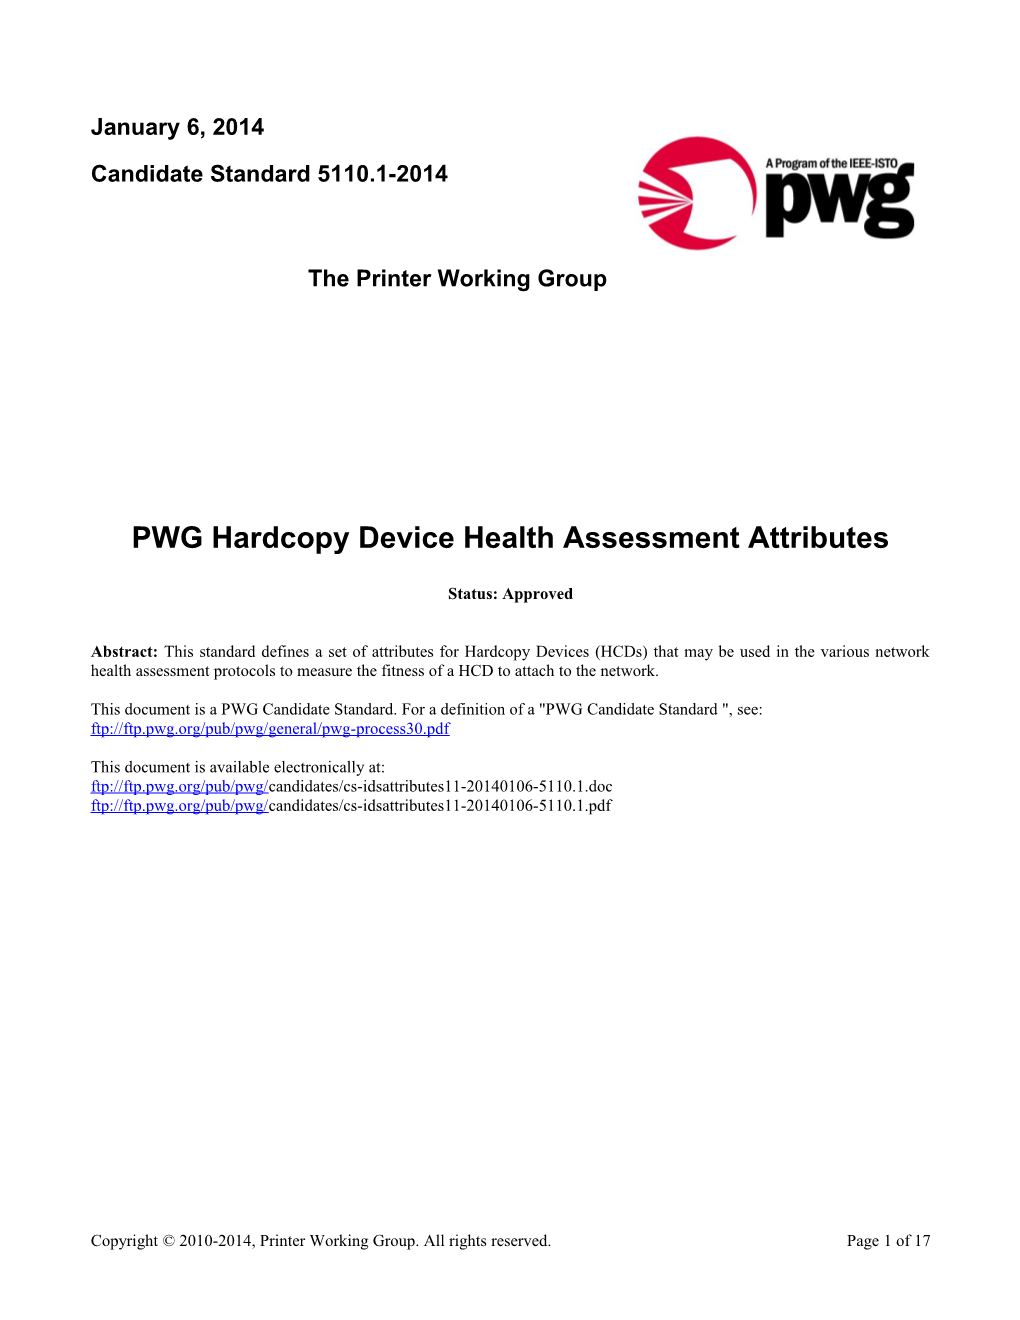 PWG Hardcopy Device Health Assessment Attributes